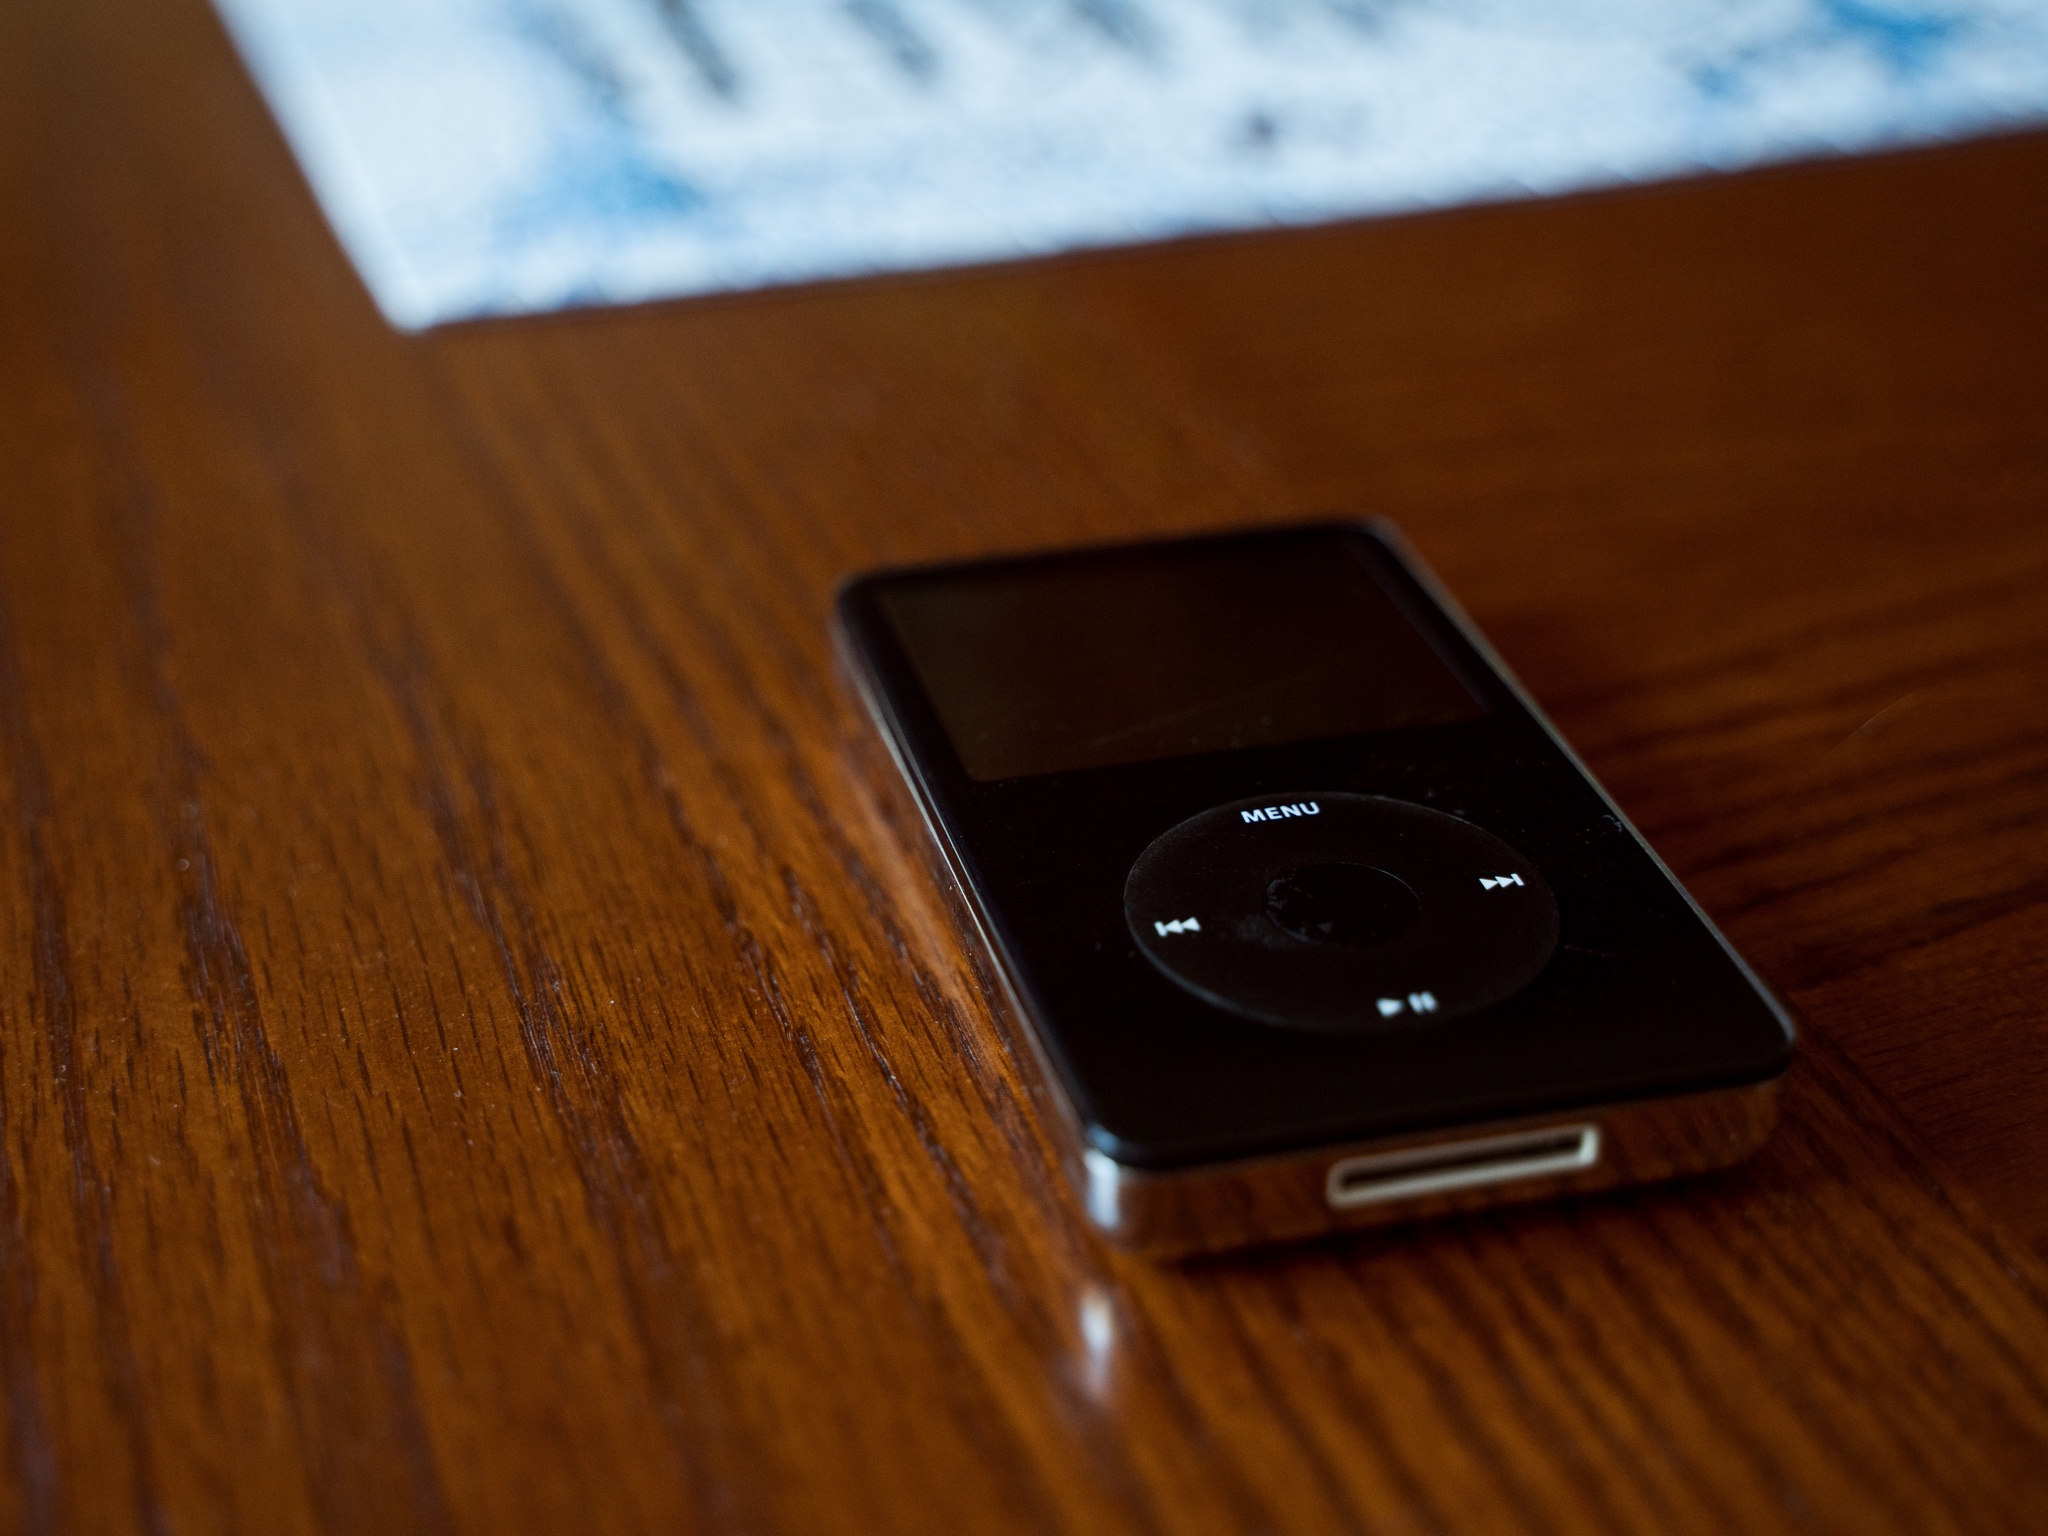 iPod Classic: Remembering Apple's Original MP3 Player